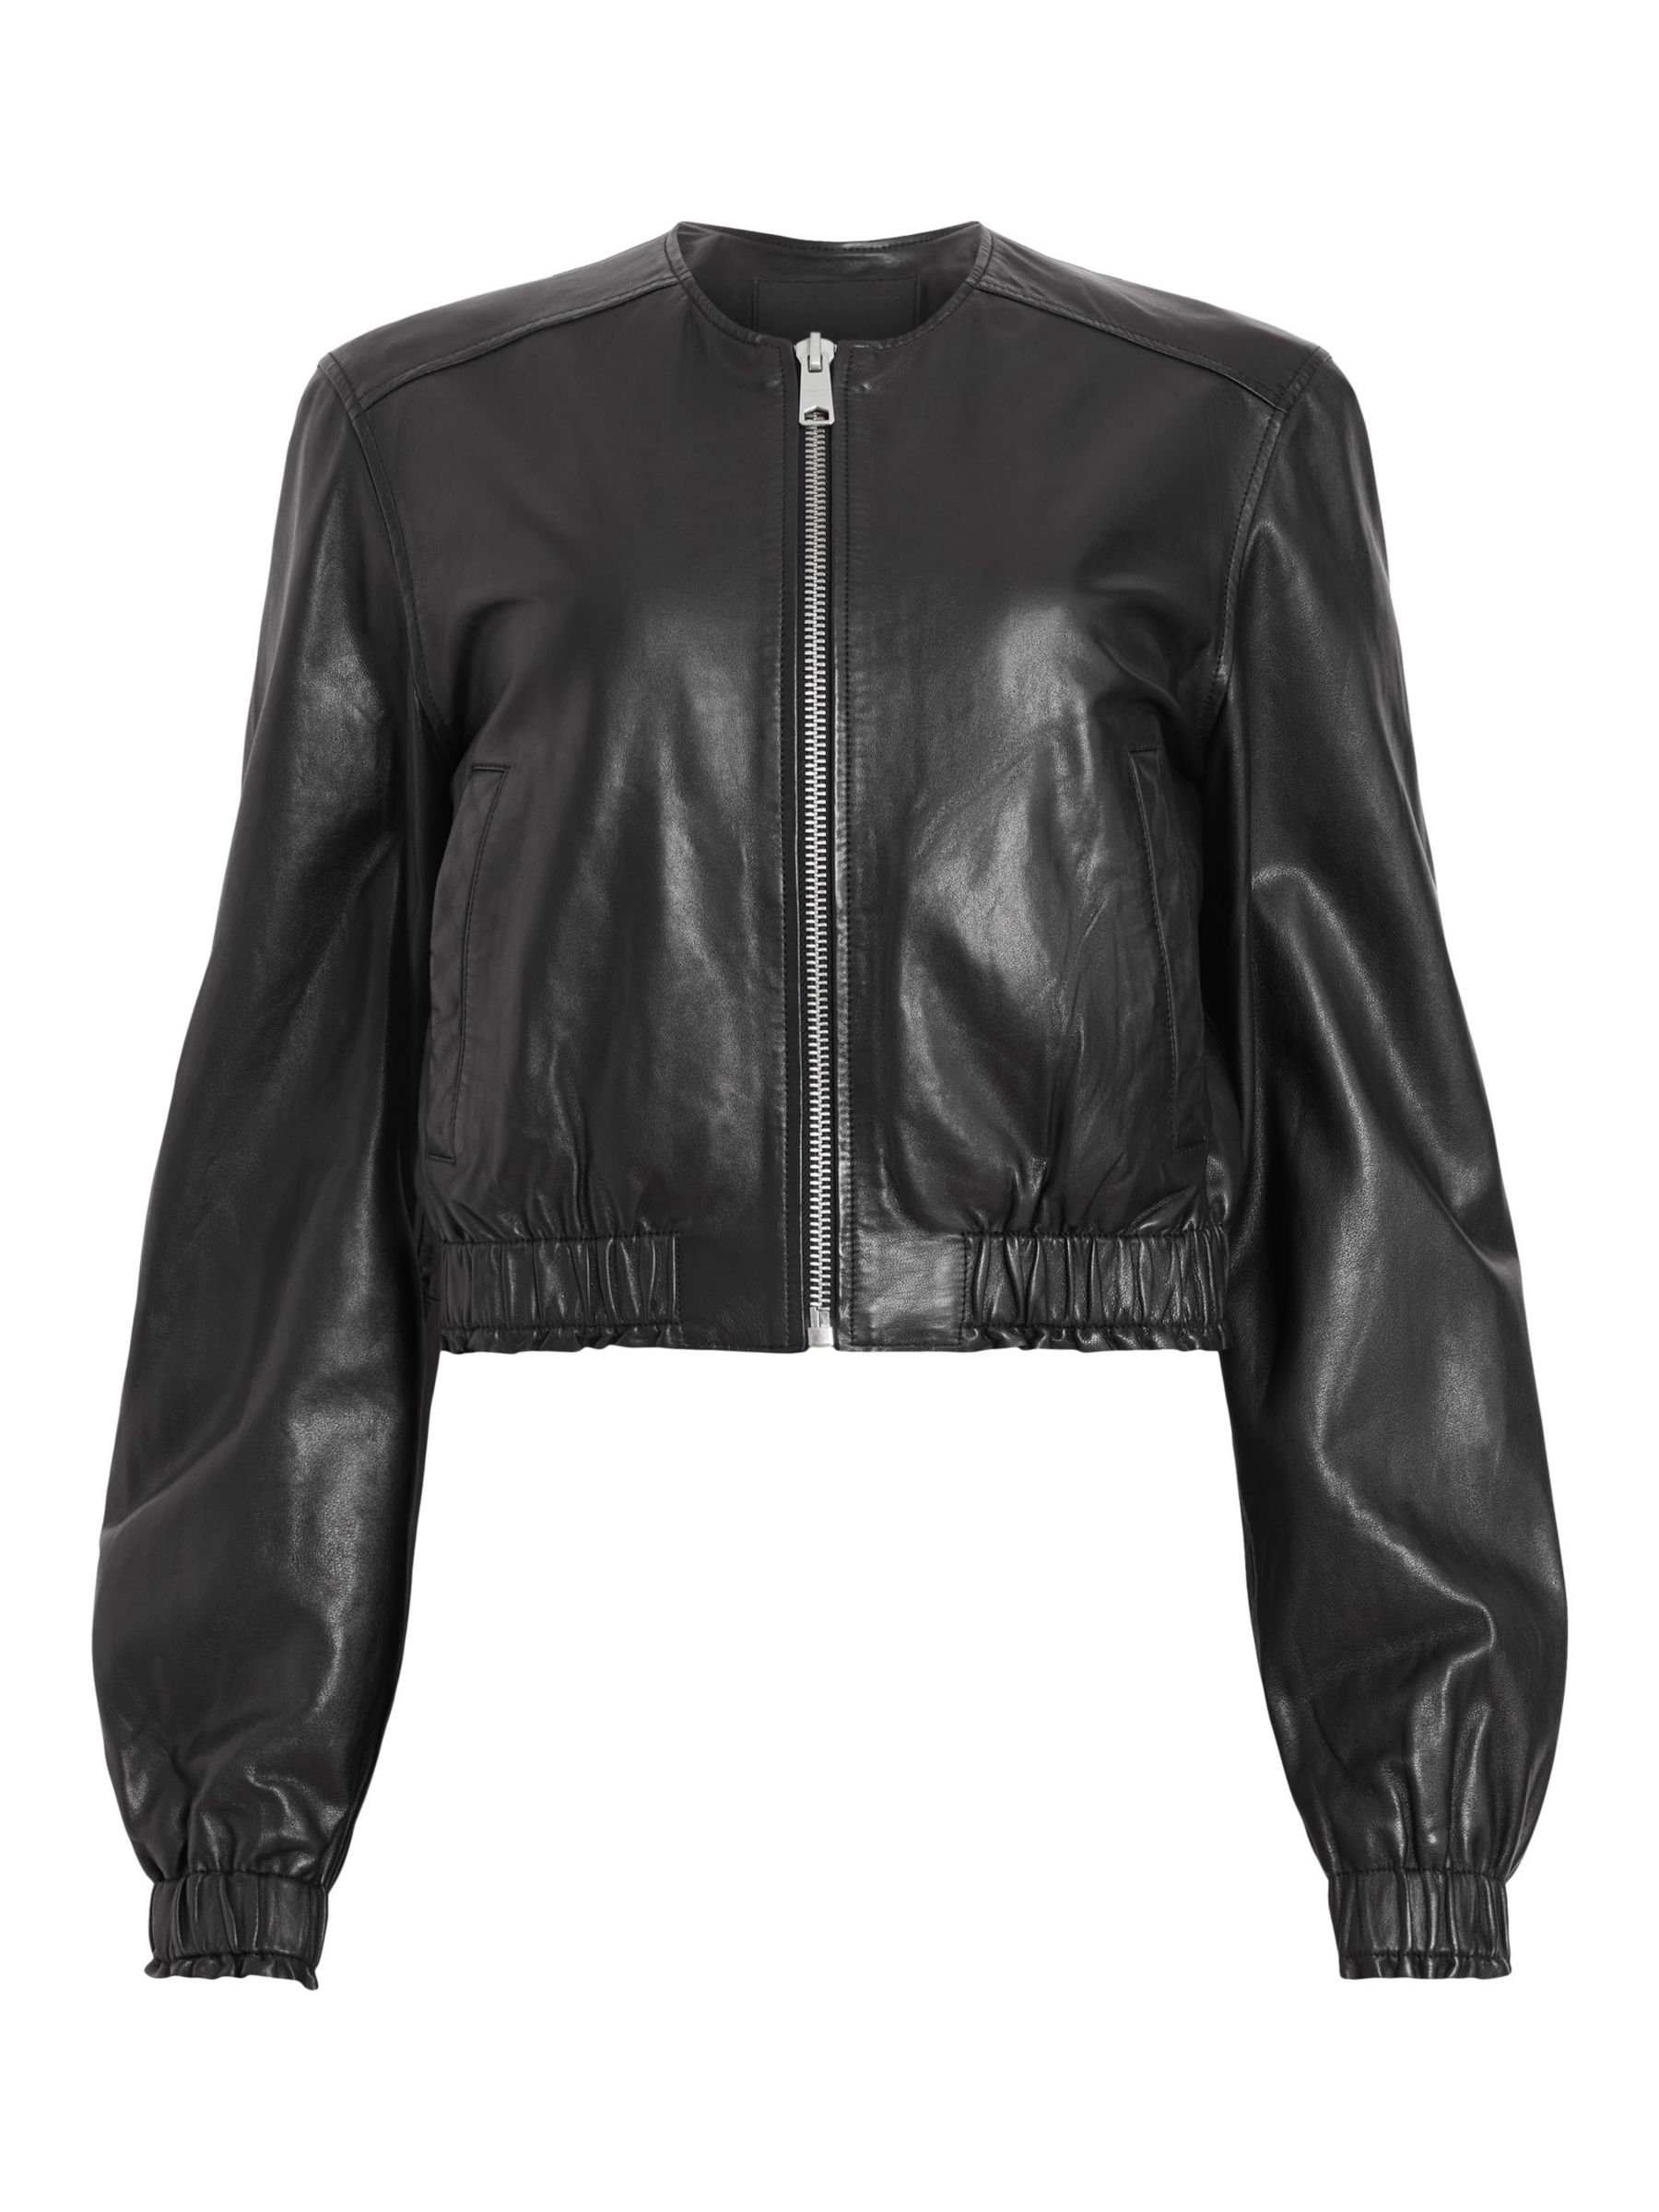 AllSaints Everly Leather Bomber Jacket, Black, 10